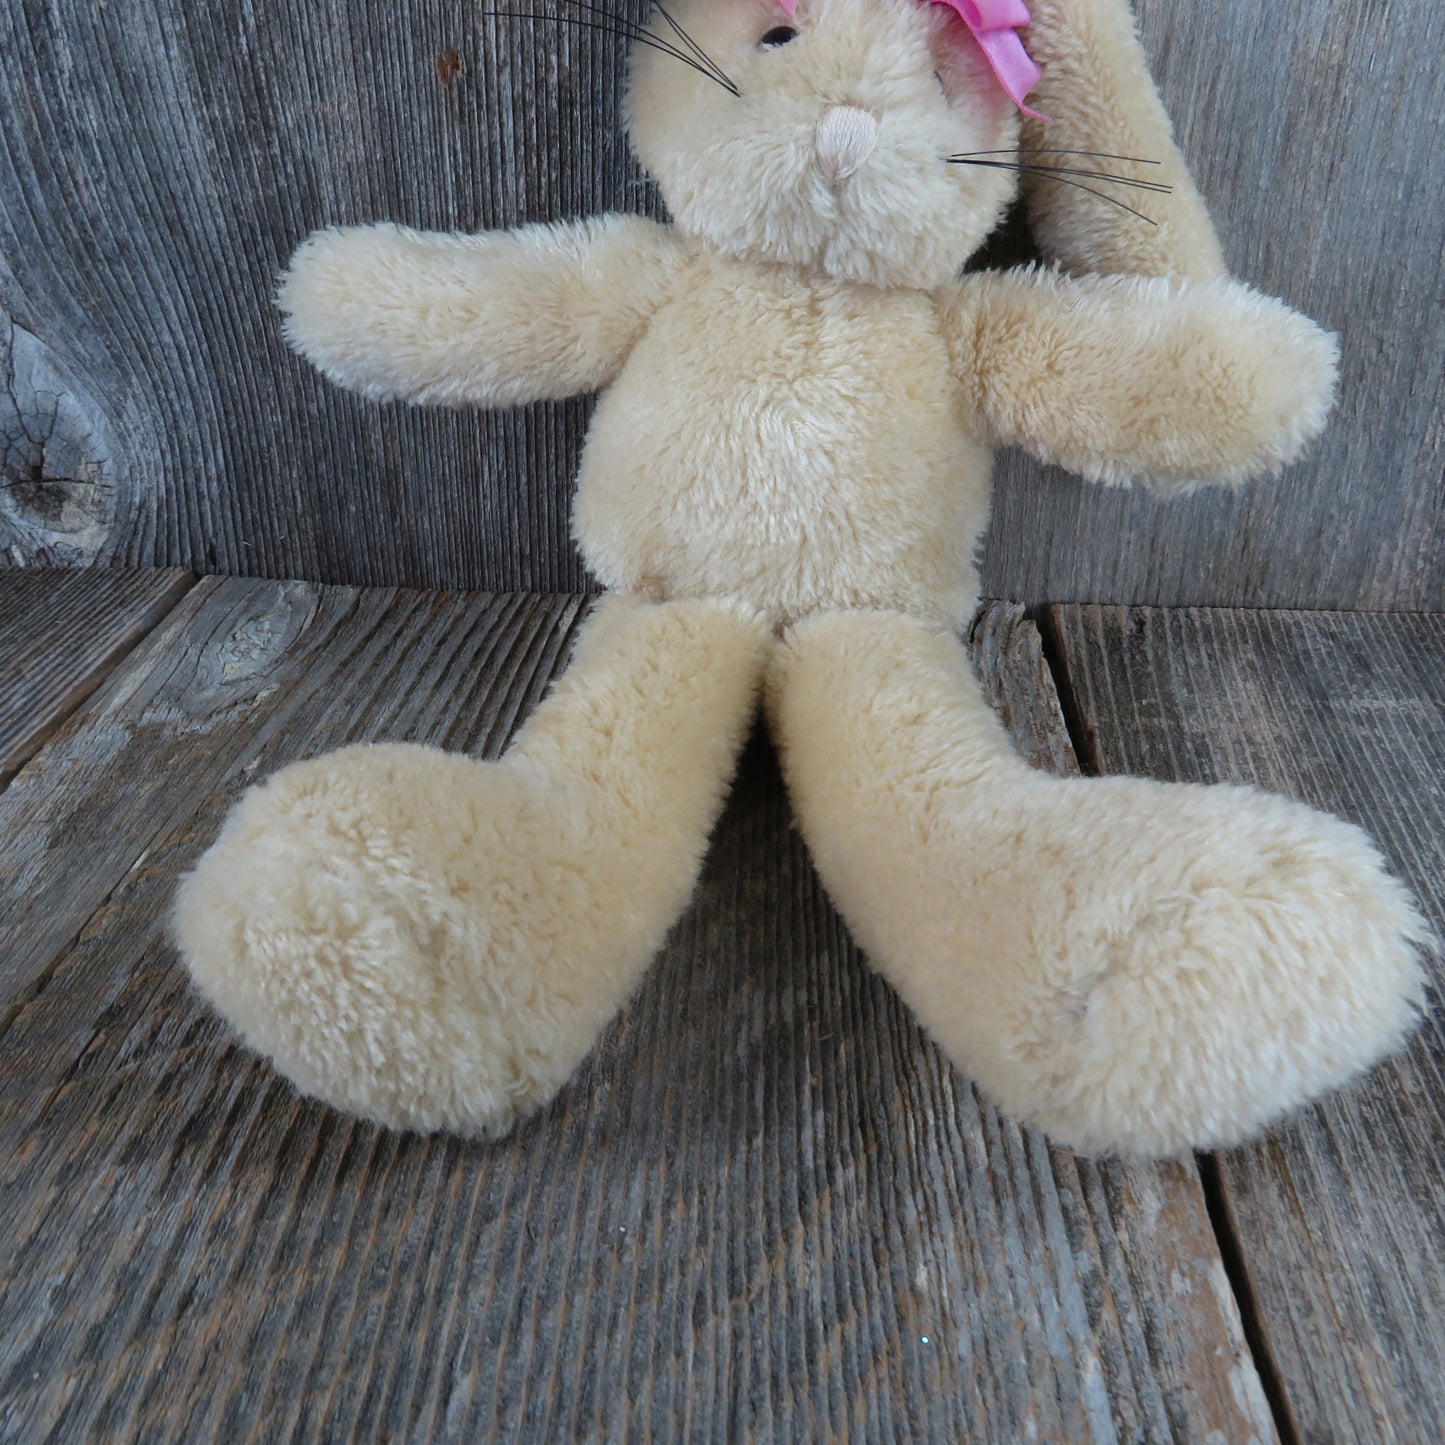 Vintage Bunny Rabbit Plush Long Legs Pink Bow Stuffed Animal Applause 1993 - At Grandma's Table